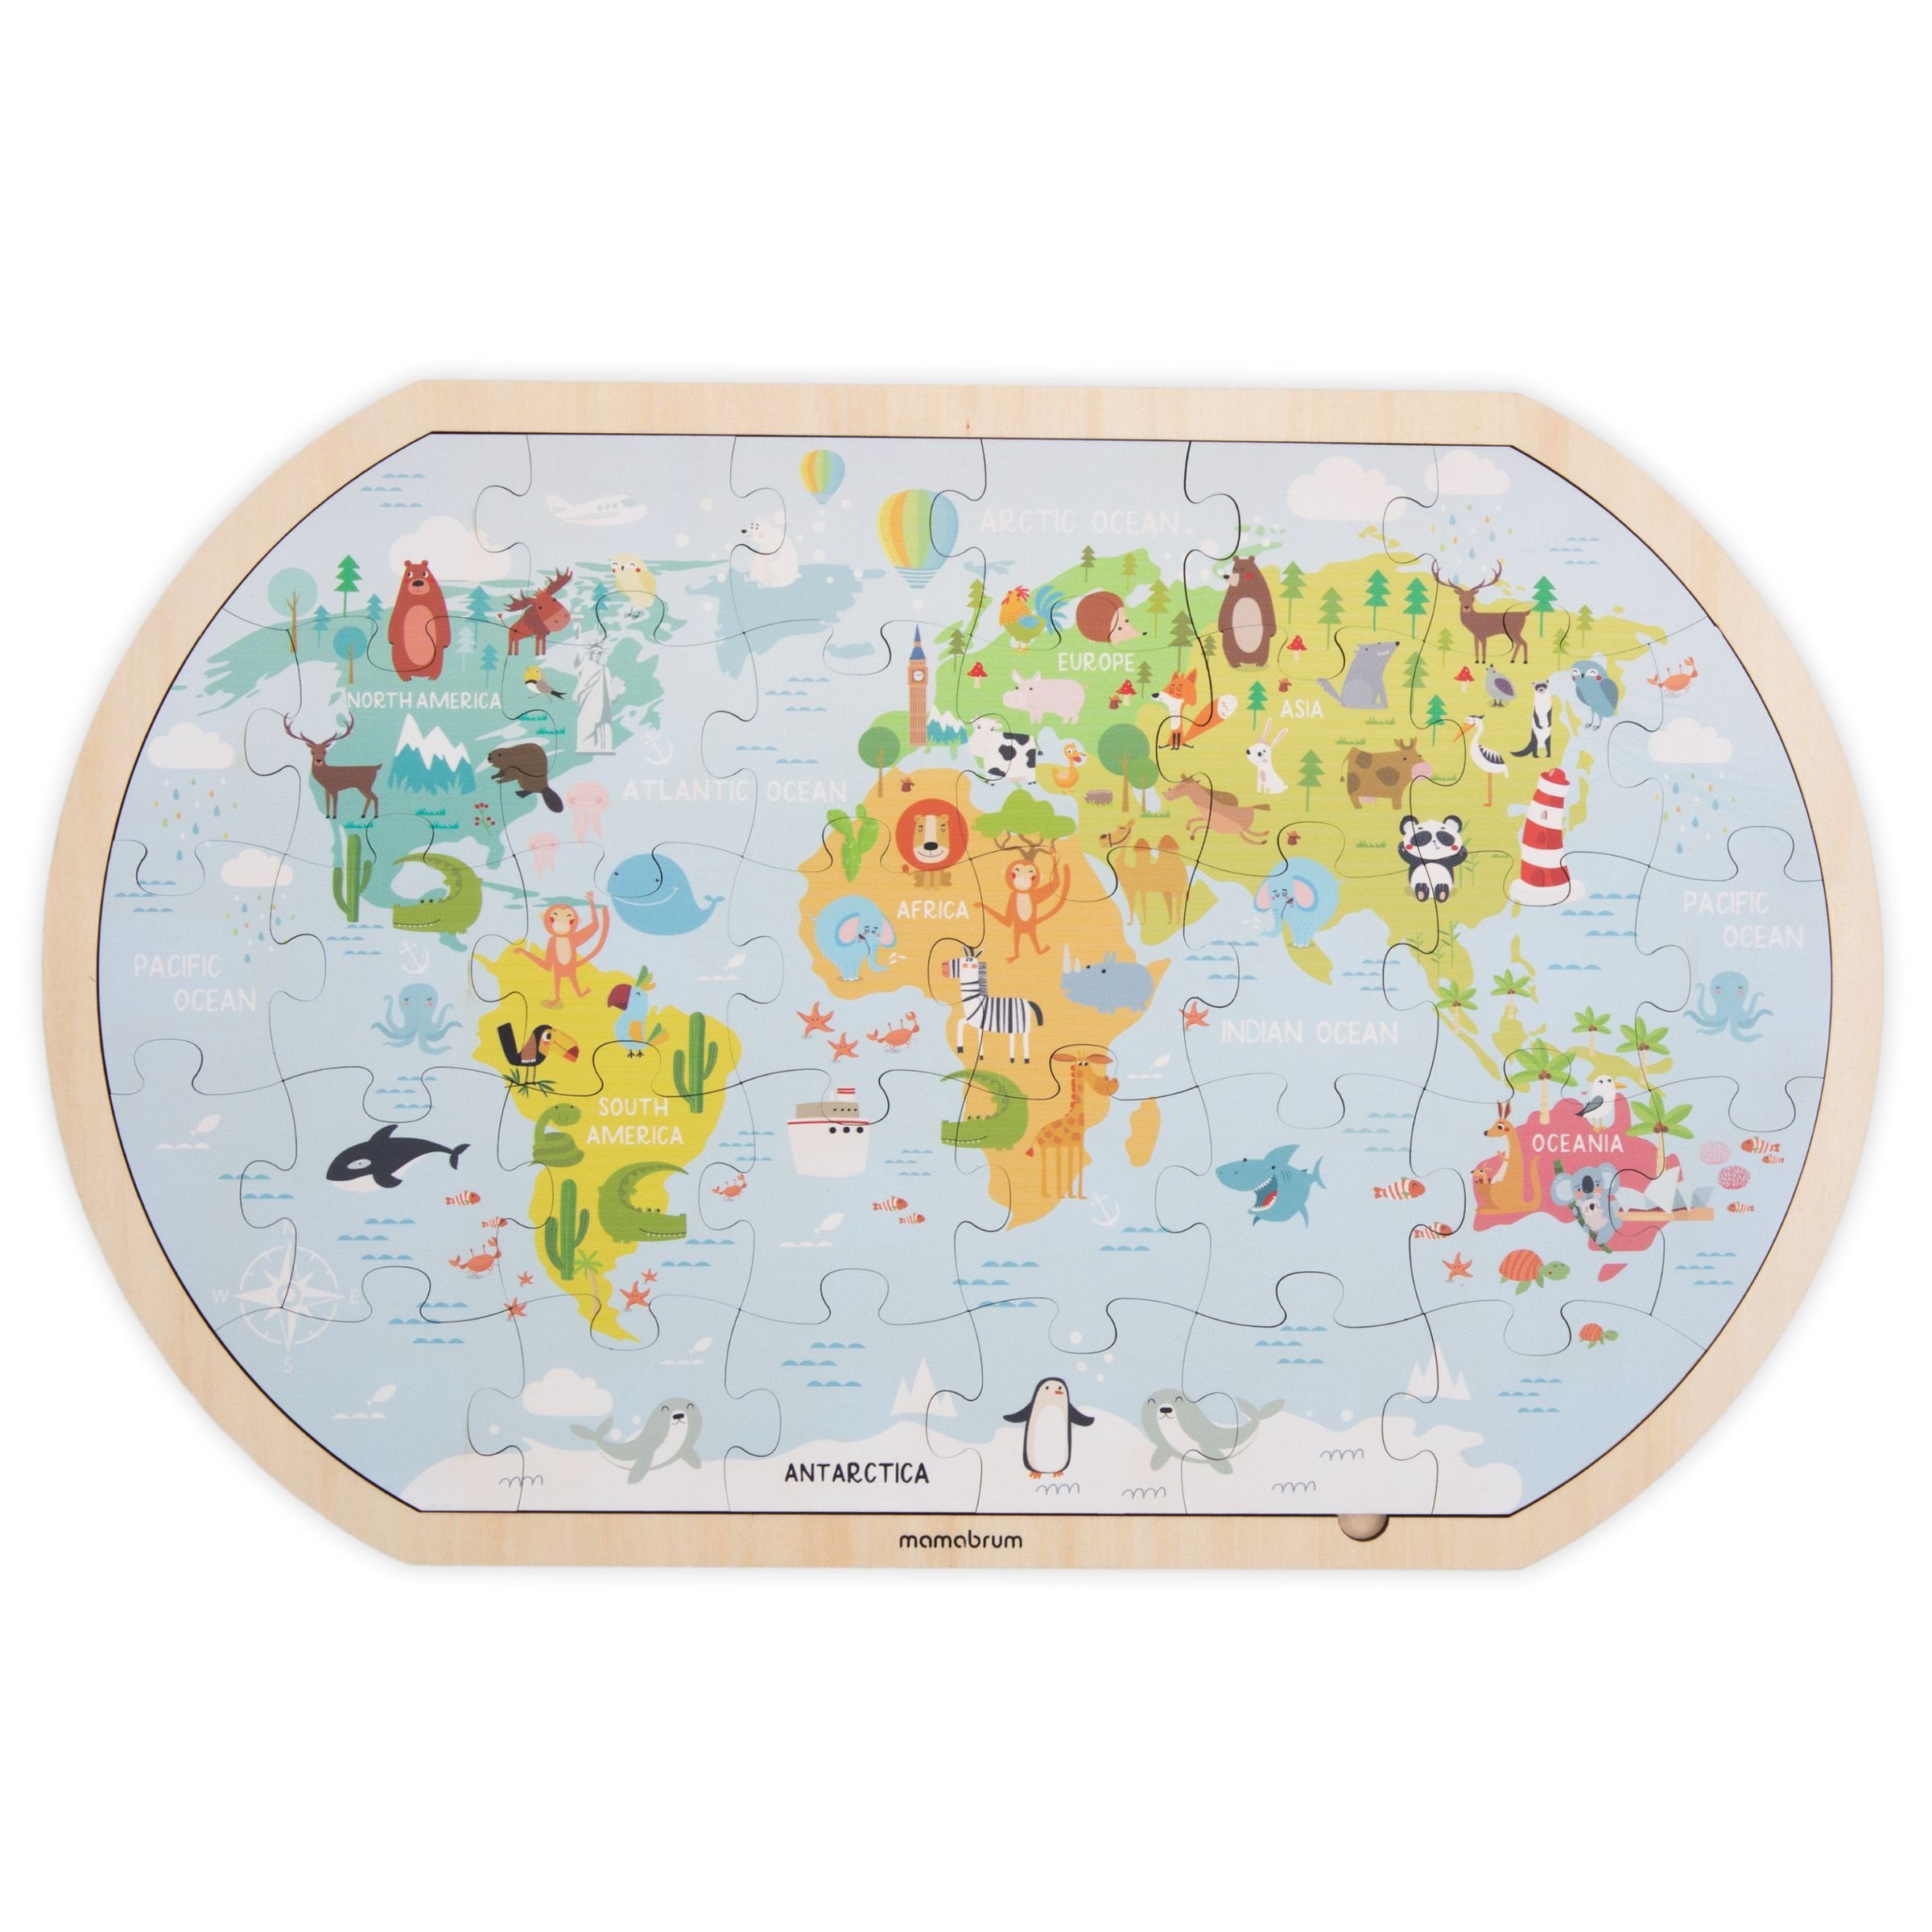 der Puzzle-Sortierschale Mamabrum Holzpuzzle Welt - Karte